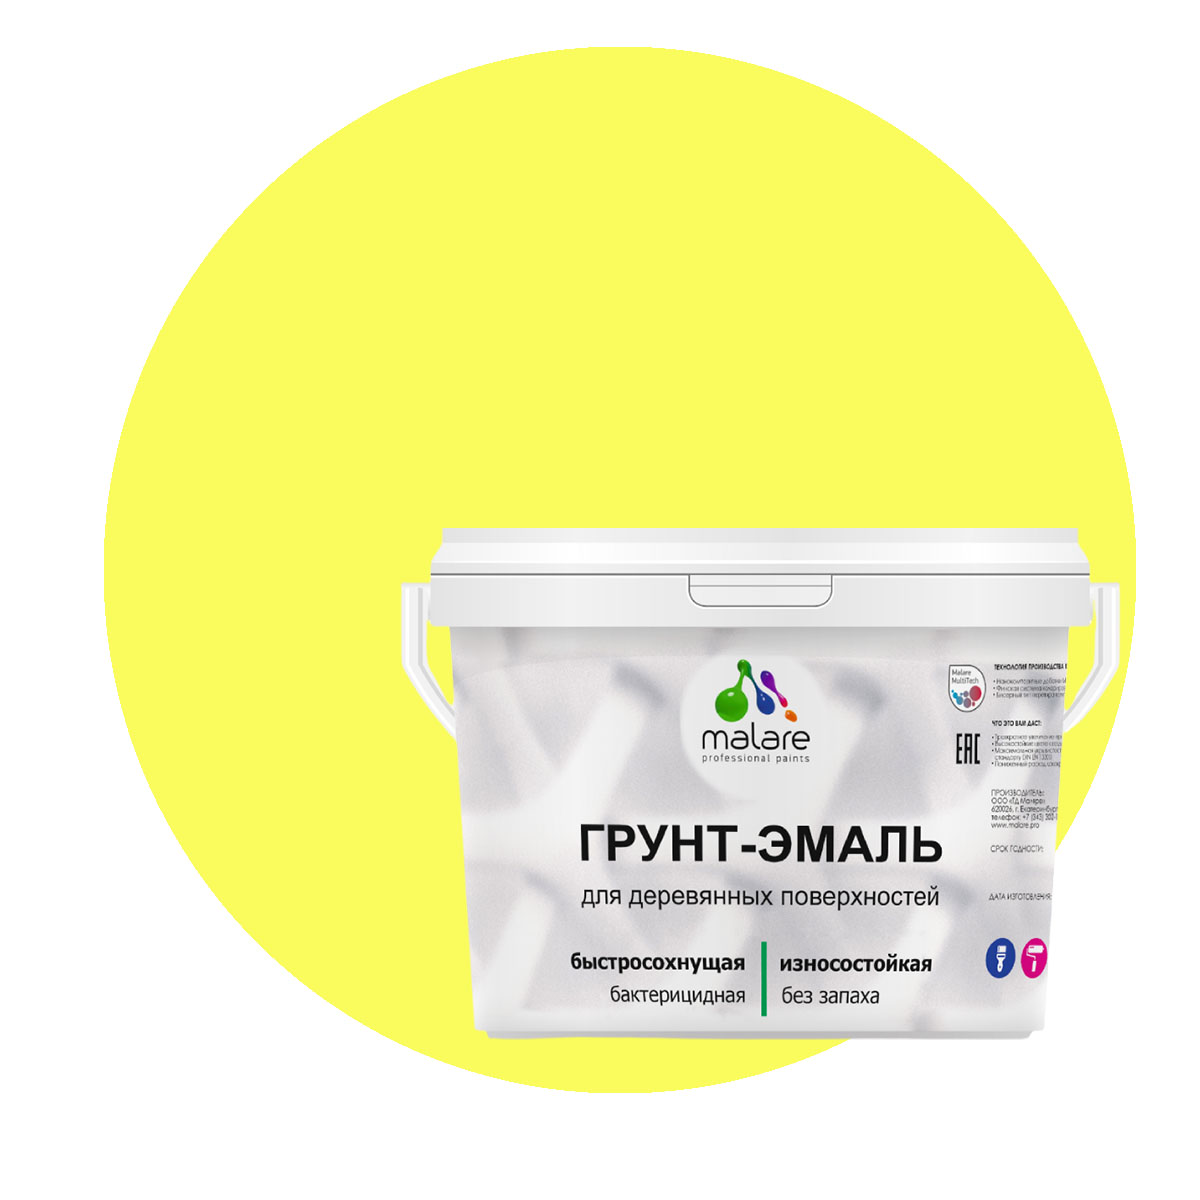 средство romax i clean для чистки кухонных поверхностей лимон 500мл Грунт-Эмаль 3 в 1 Malare для деревянных поверхностей, cпелый лимон, 10 кг.